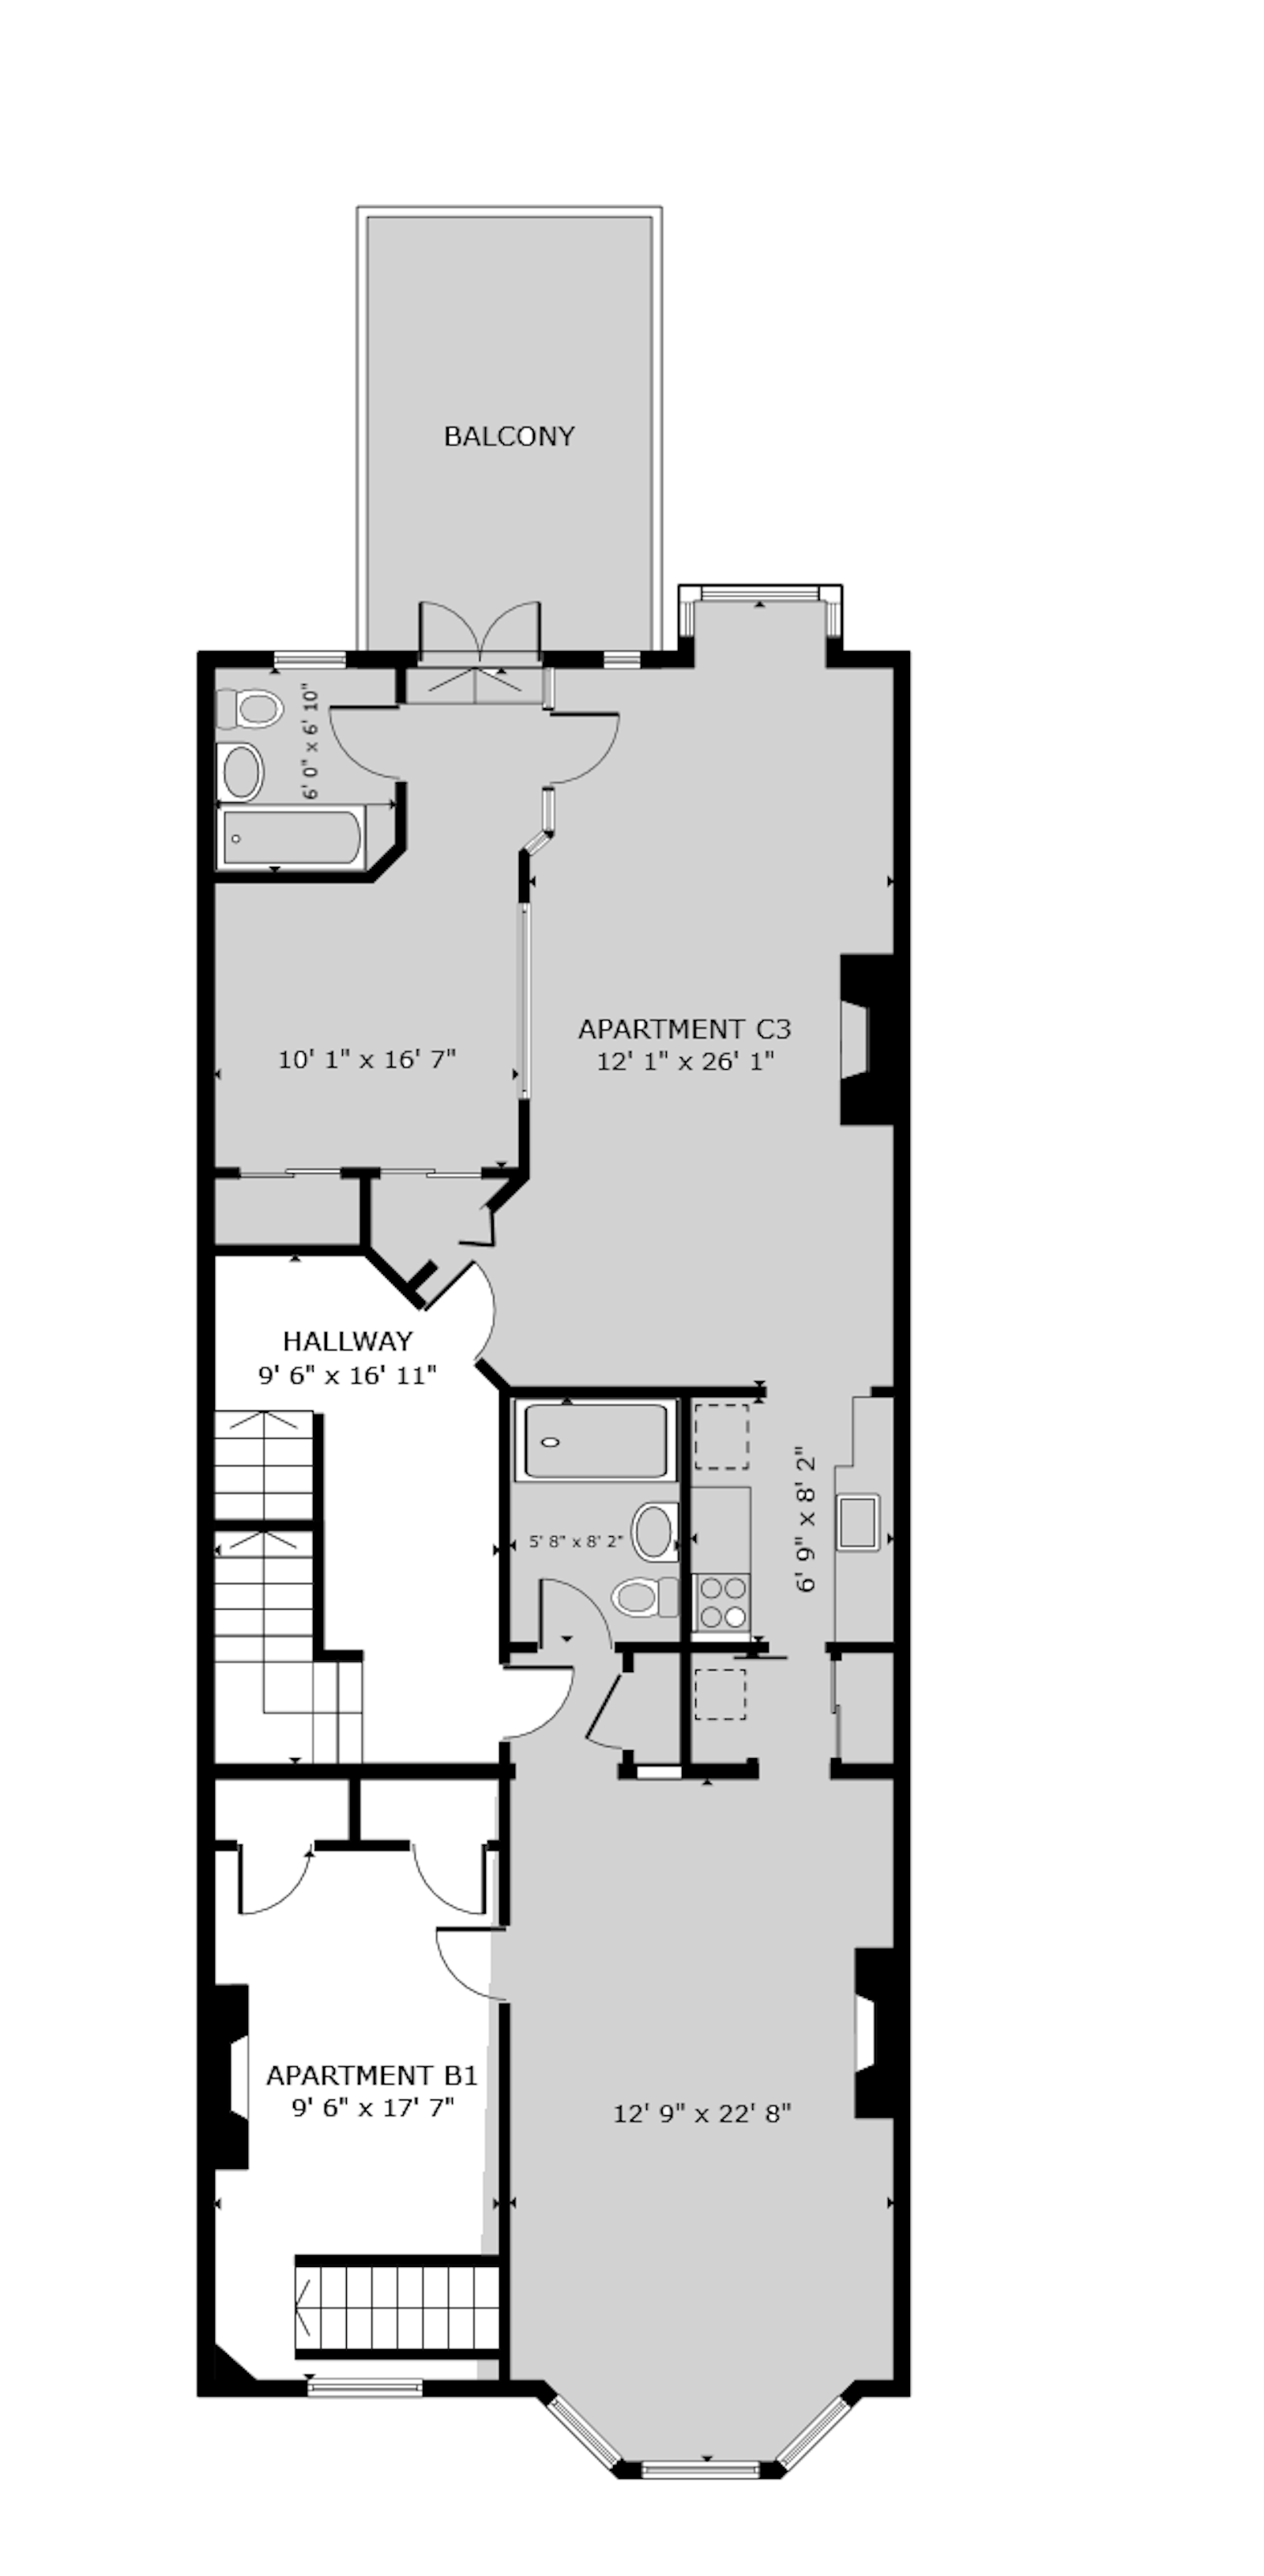 Floorplan for 50 West 86th Street, C3